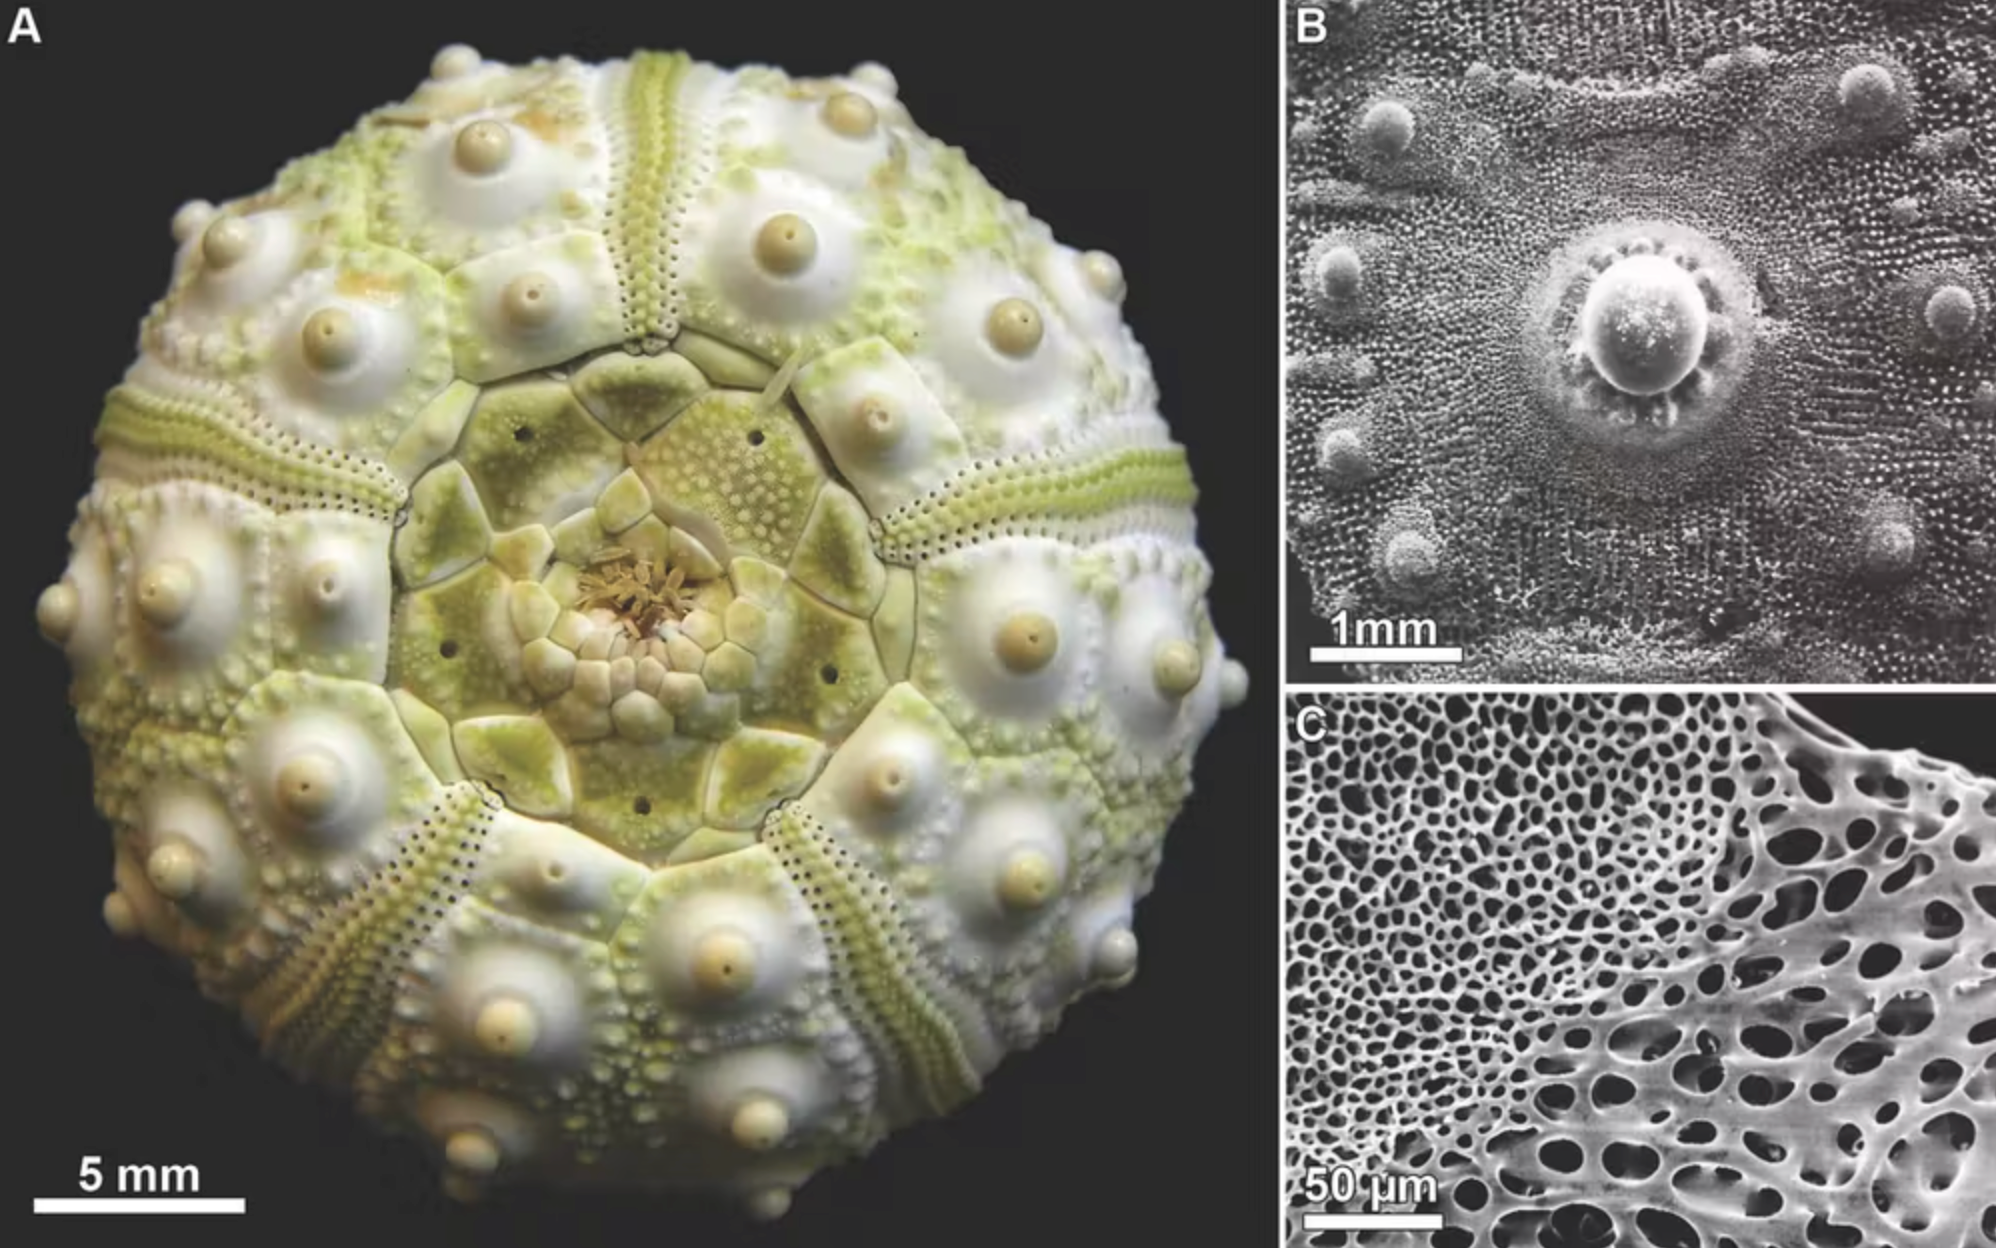 This strange 500-million-year-old sea urchin relative lost its skeleton